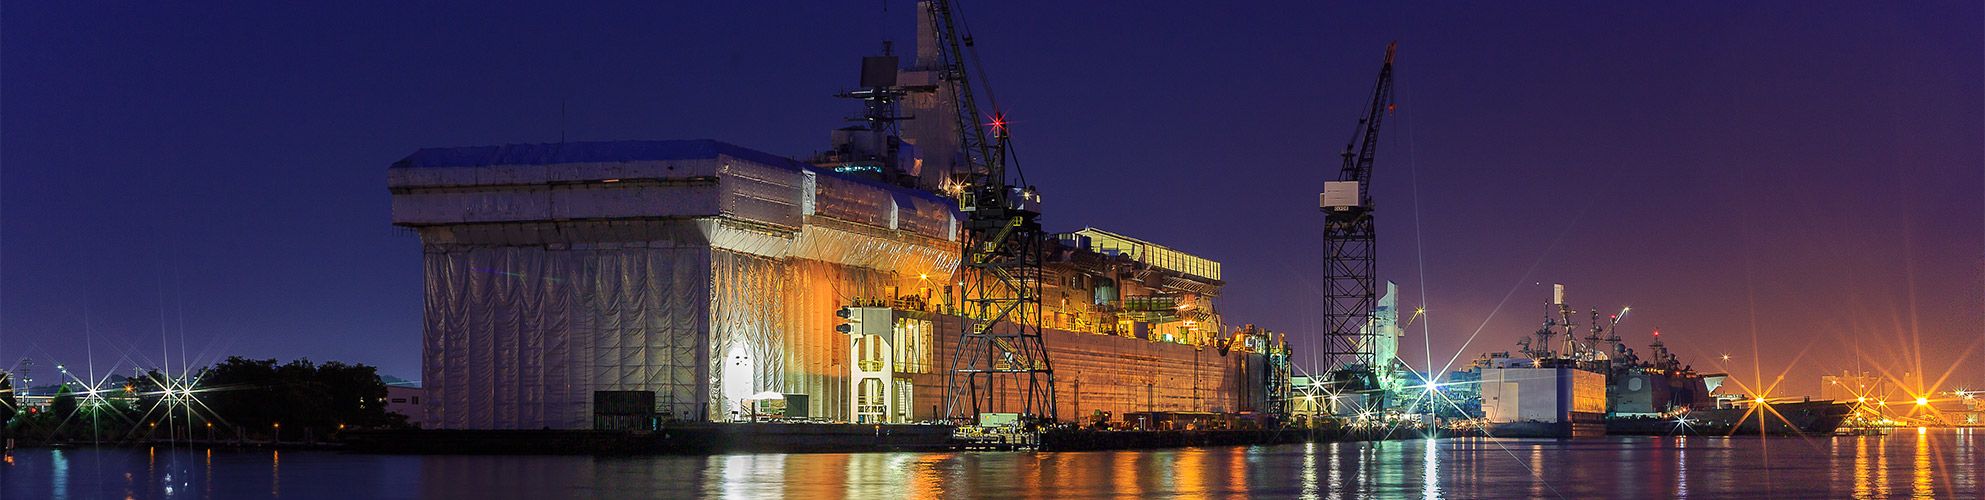 Military ship at Portsmouth Naval Shipyard